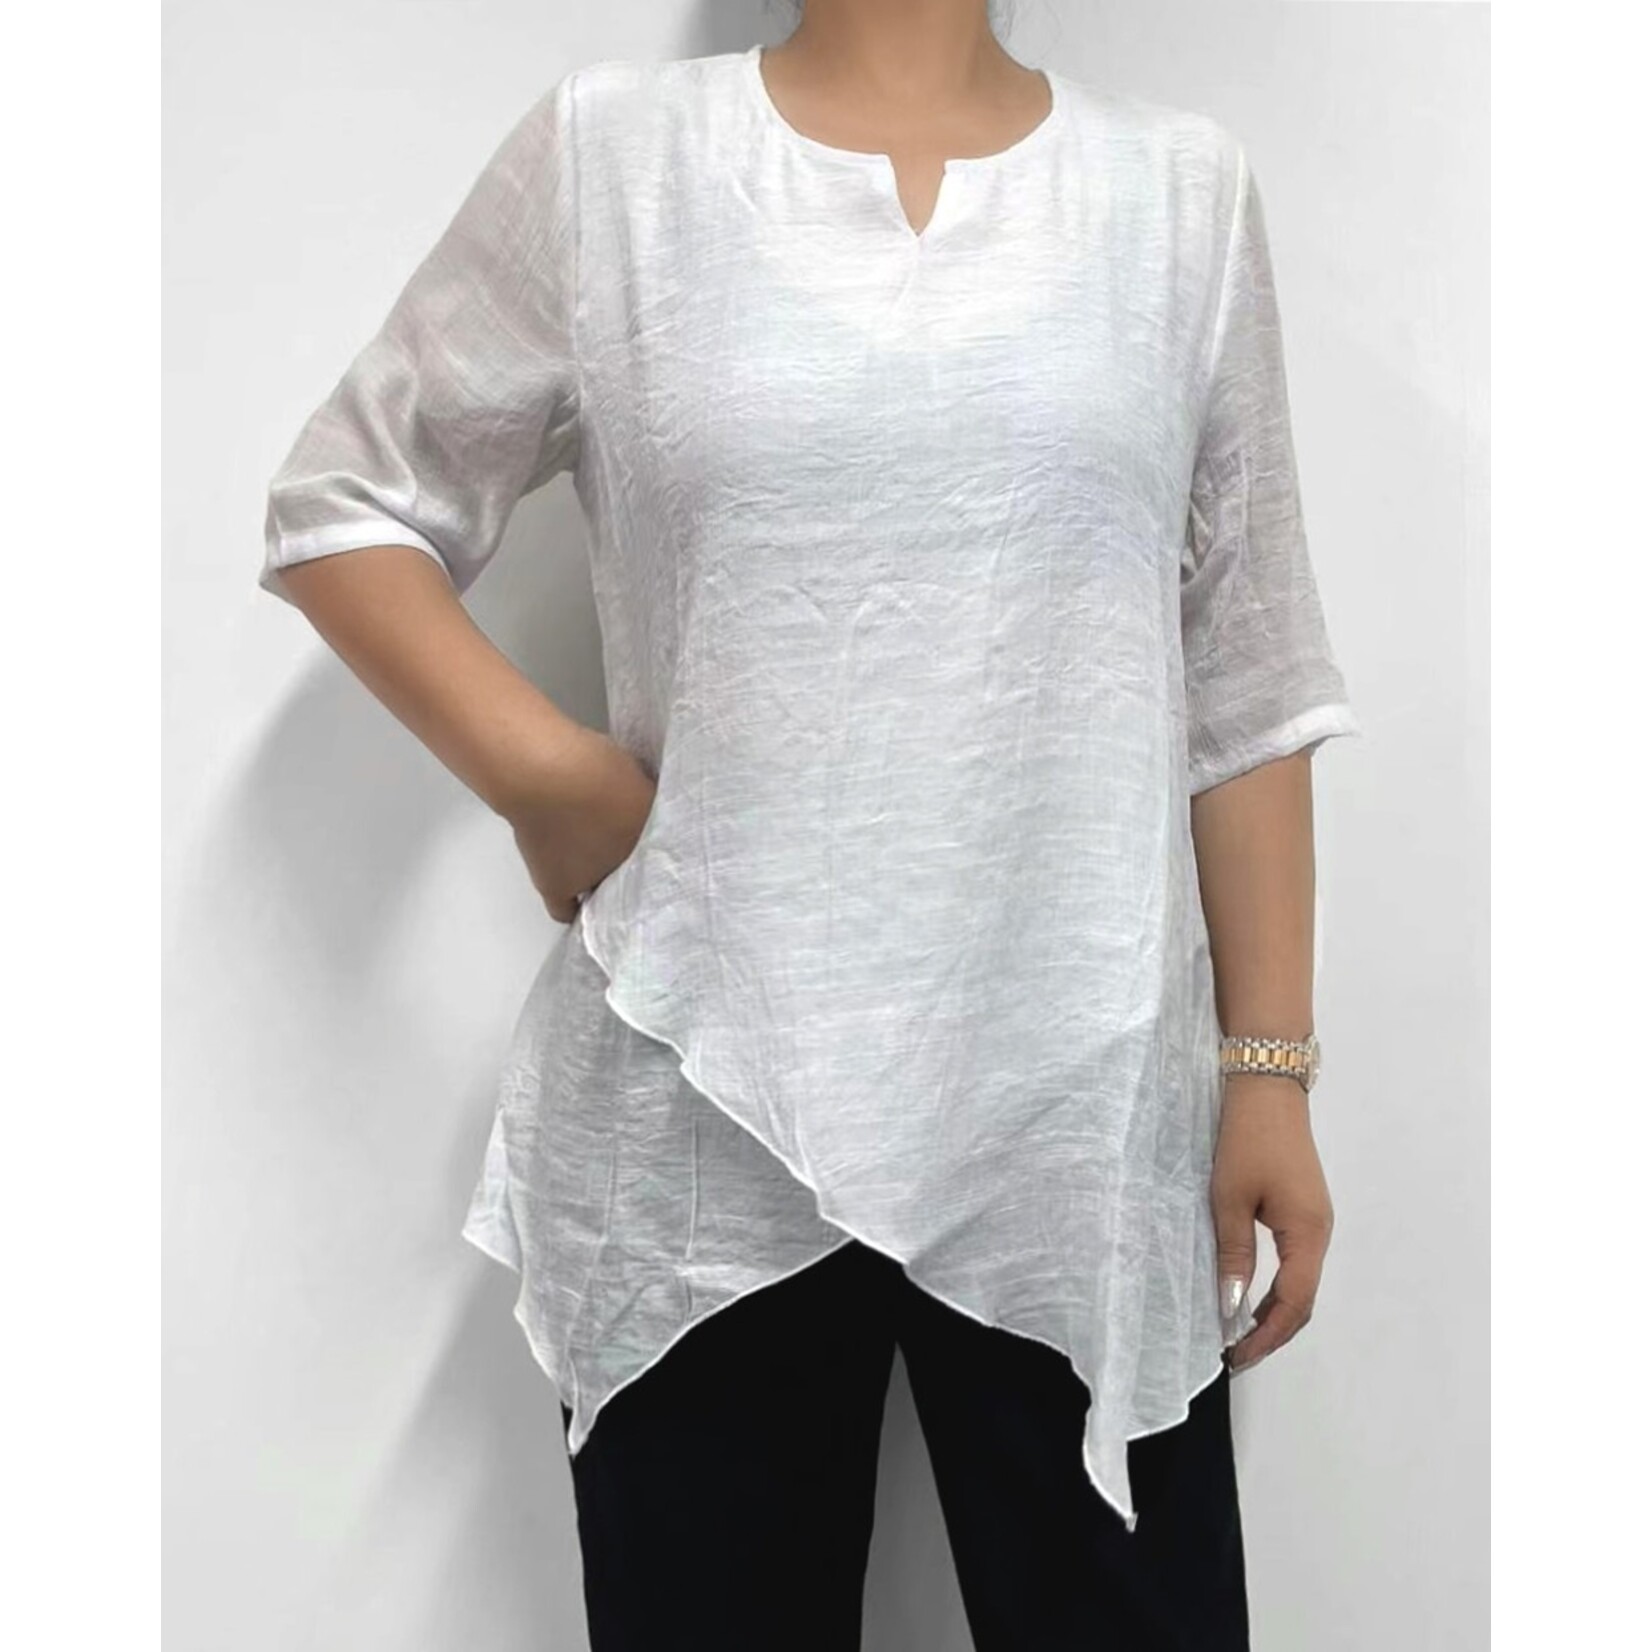 Creations cotton/polyester blend short sleeve split top, blouse, shirt